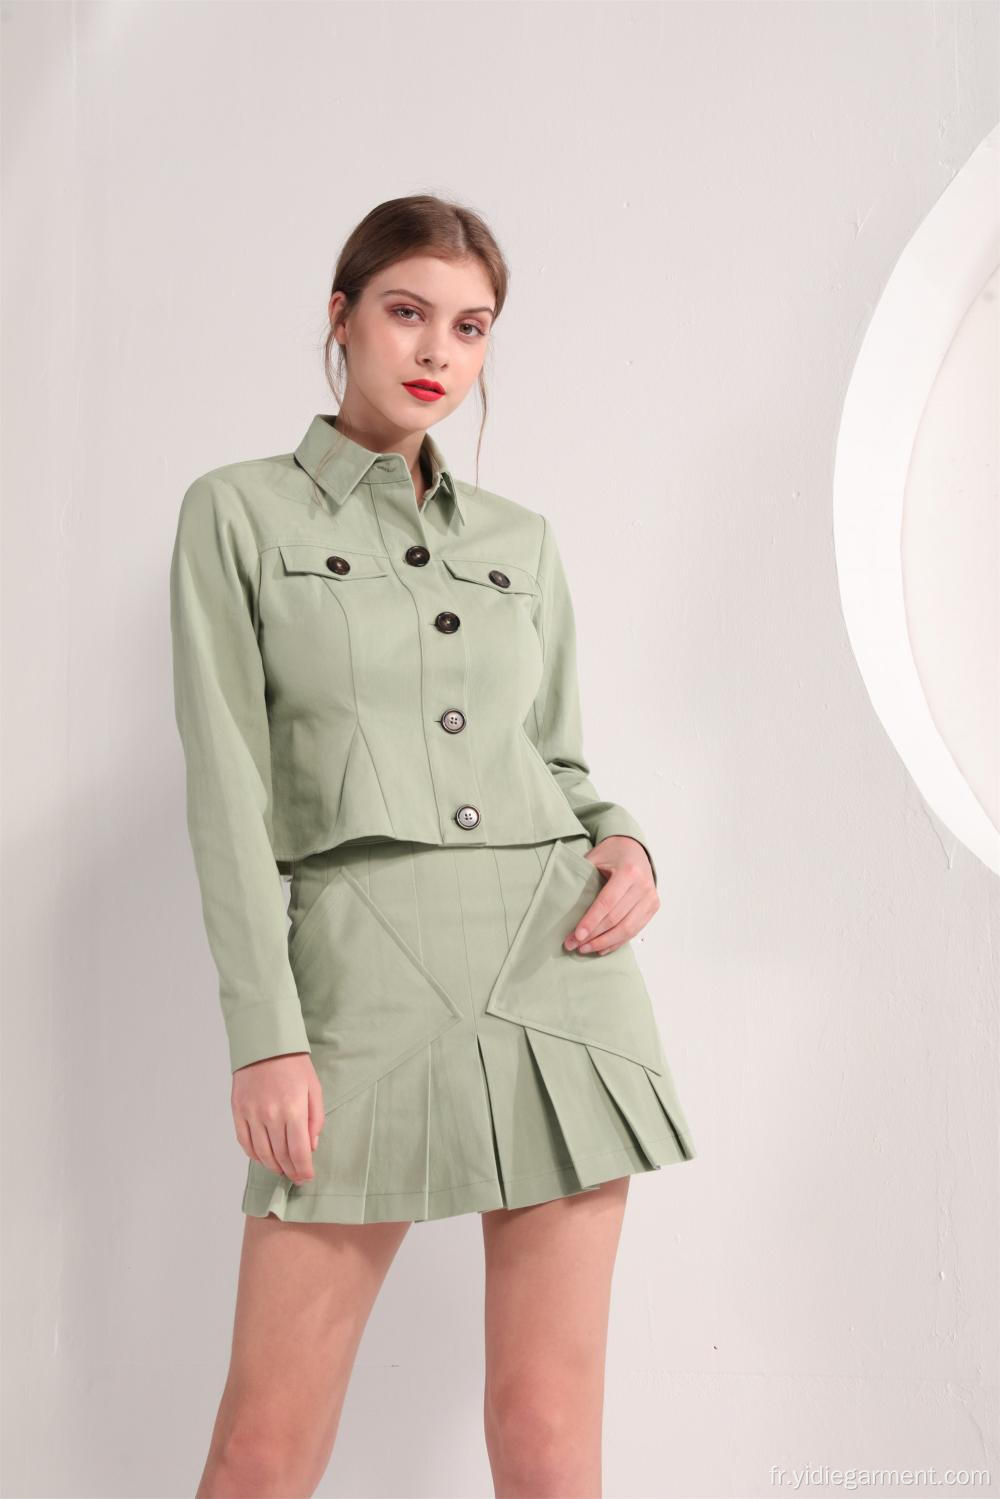 Veste femme vert olive et mini jupe plissée